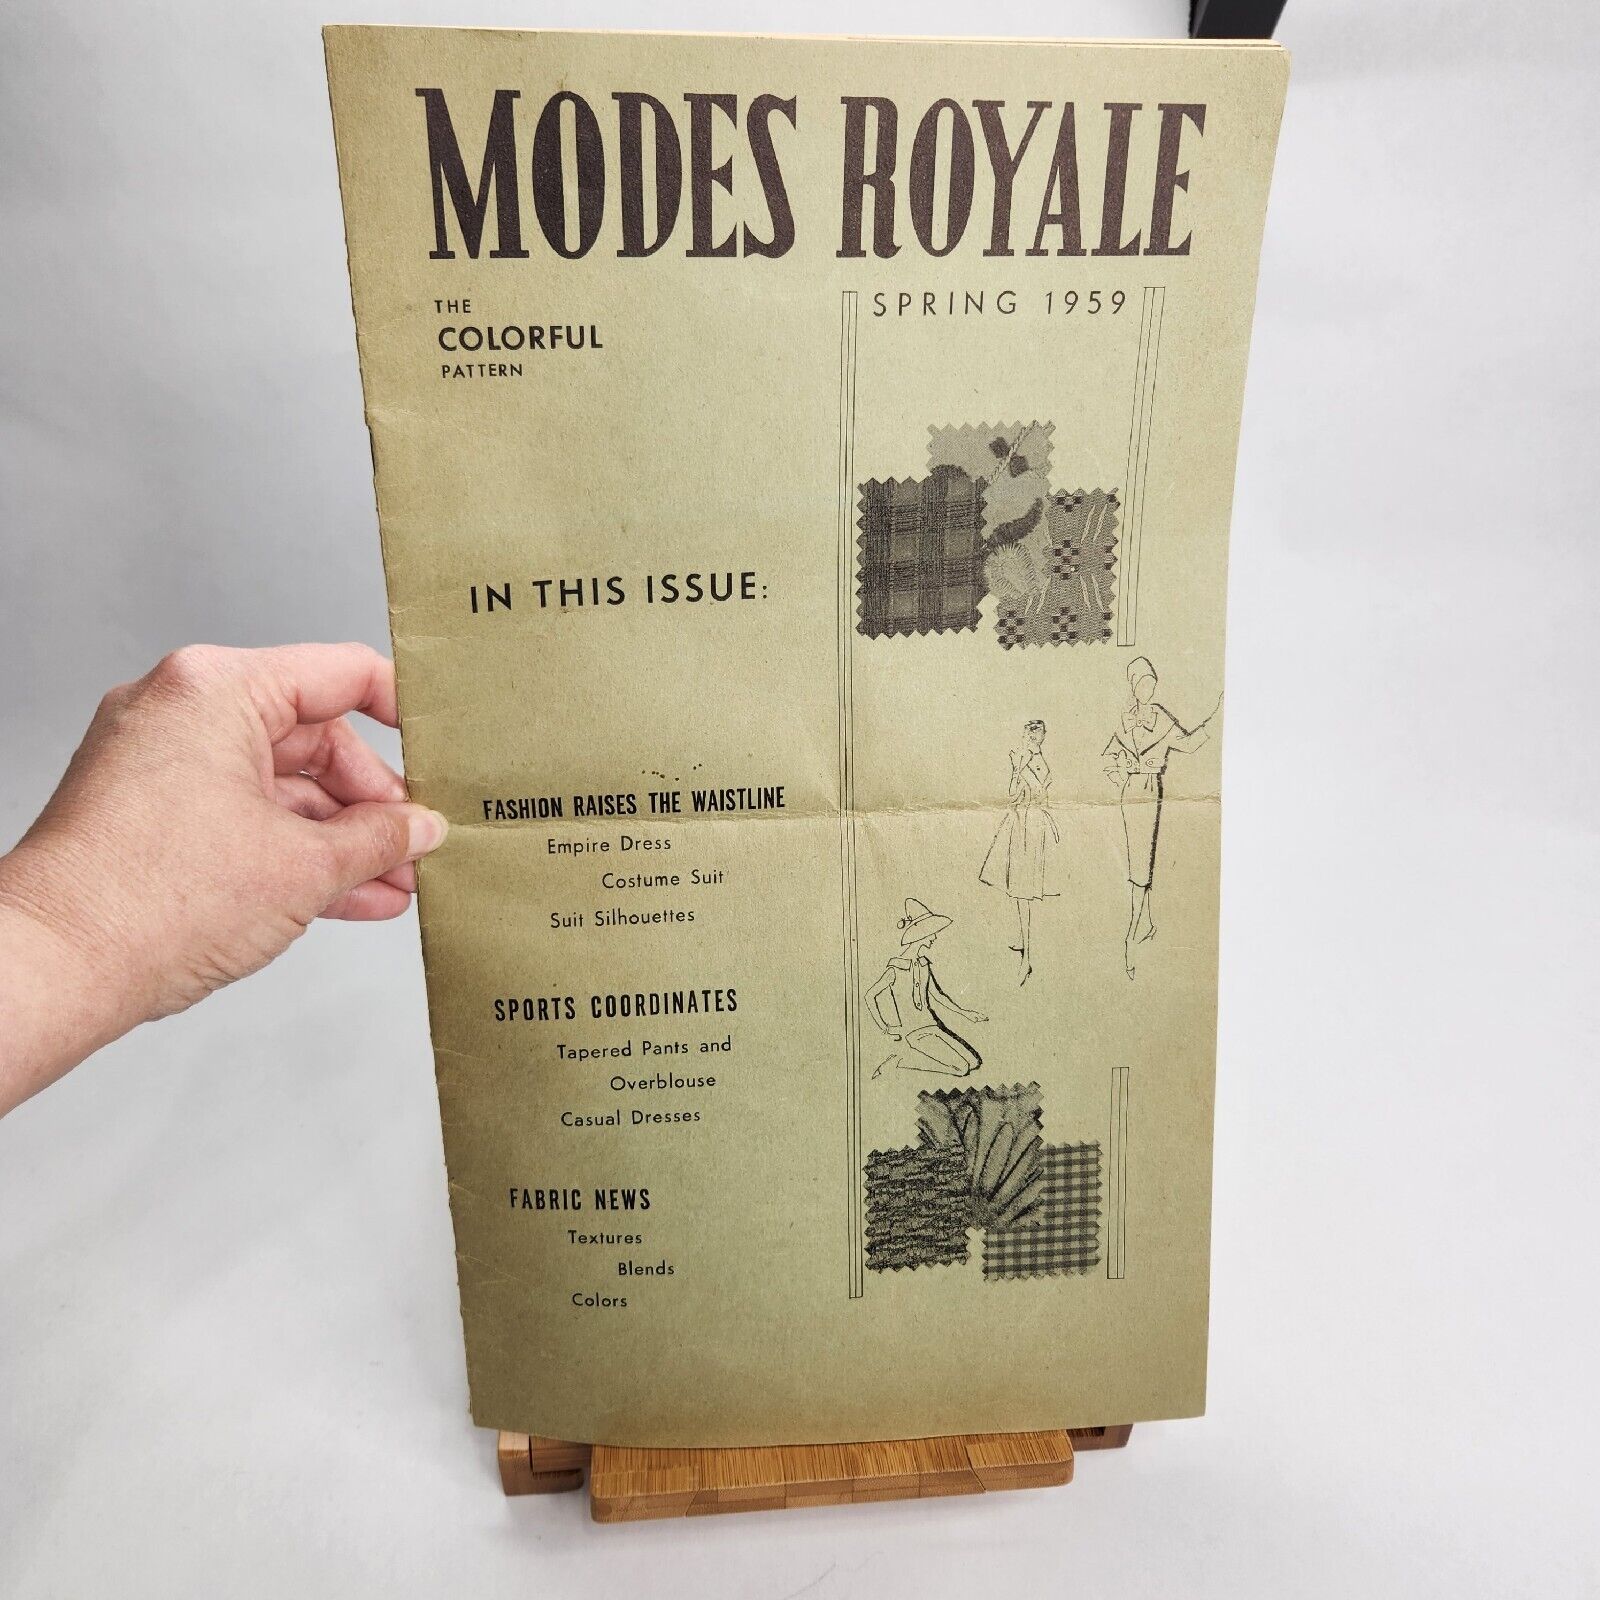 Vintage Modes Royale Sewing Pattern Booklet Spring 1959 16